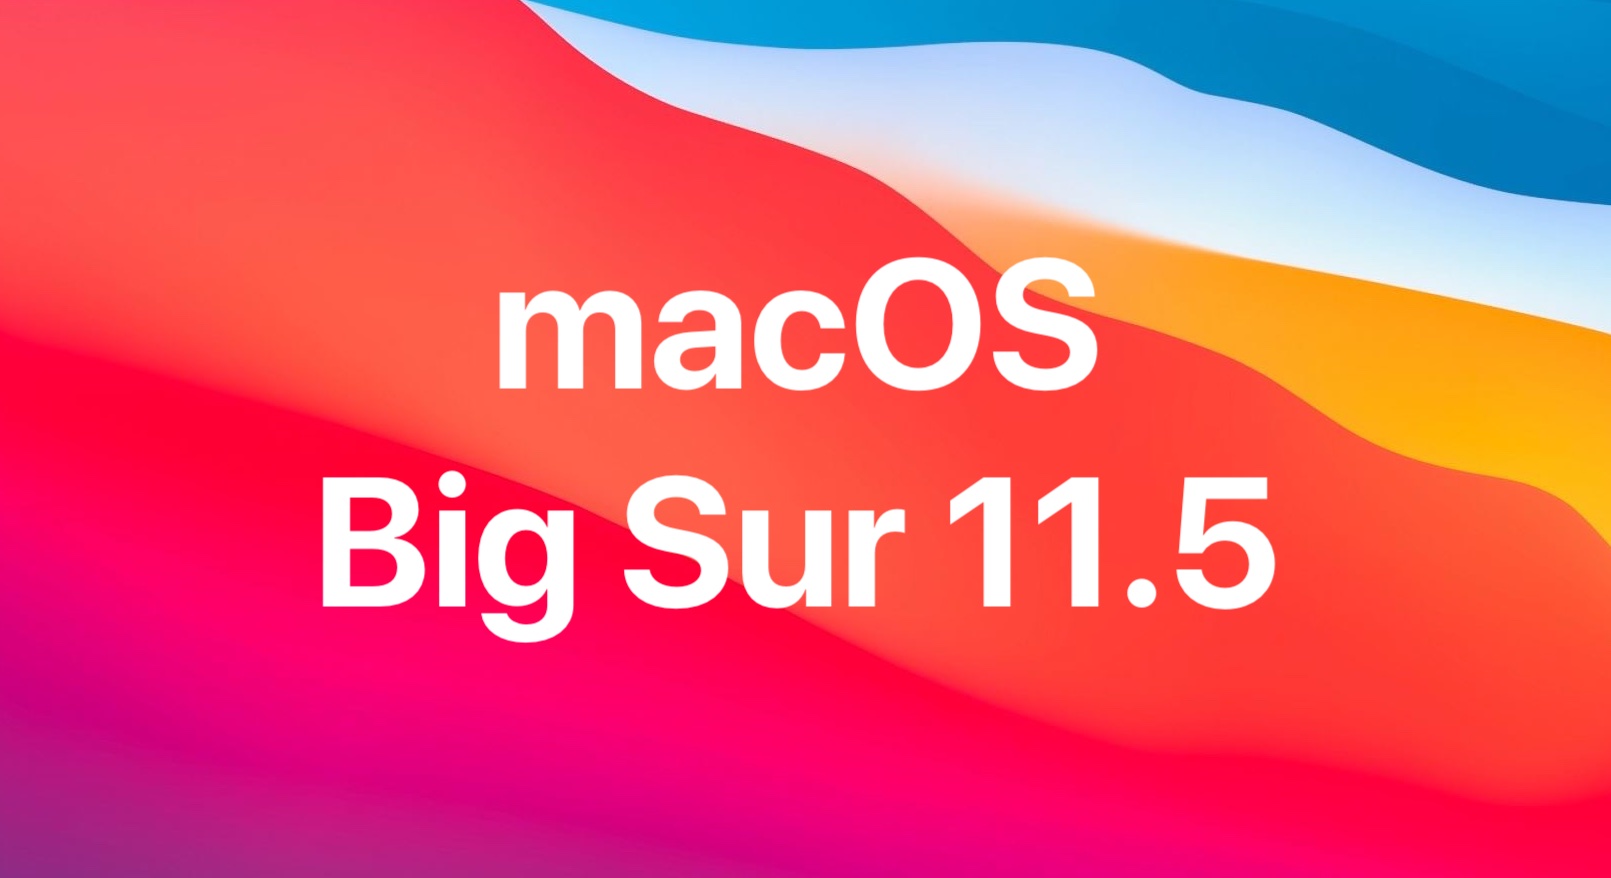 Co nowego w systemie macOS Big Sur 11.5?